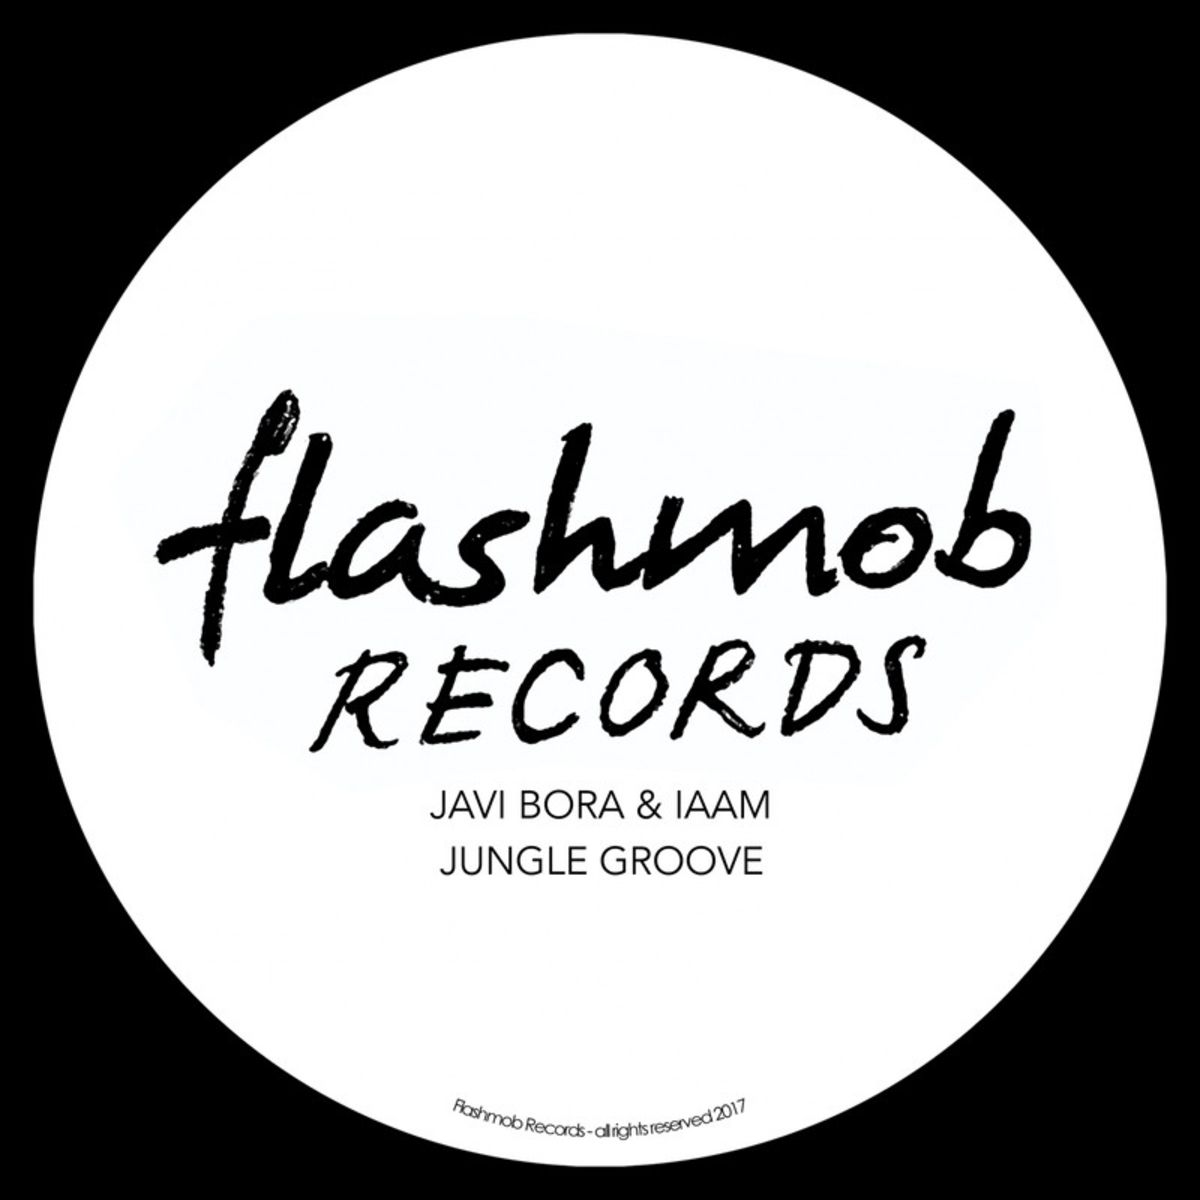 Javi Bora & IAAM - Jungle Groove / Flashmob Records